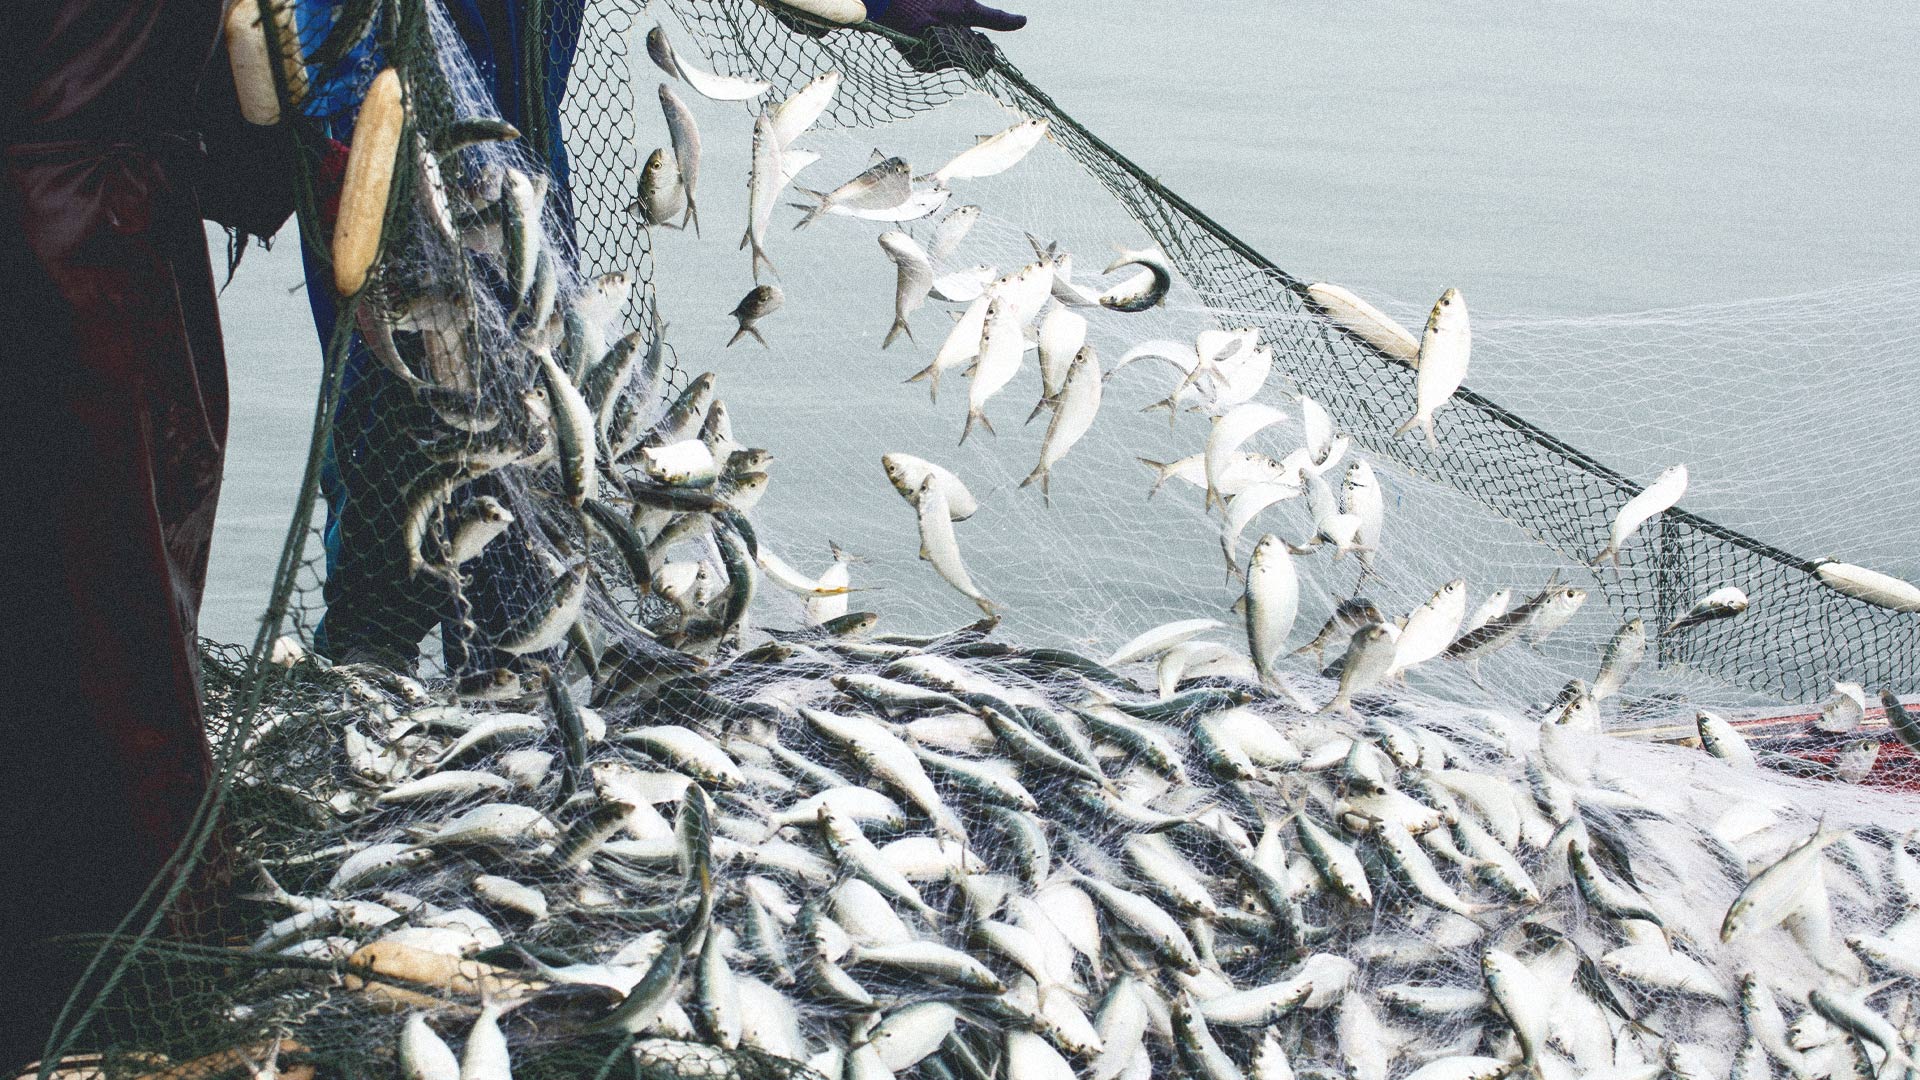 Ensuring bigger fish, Research